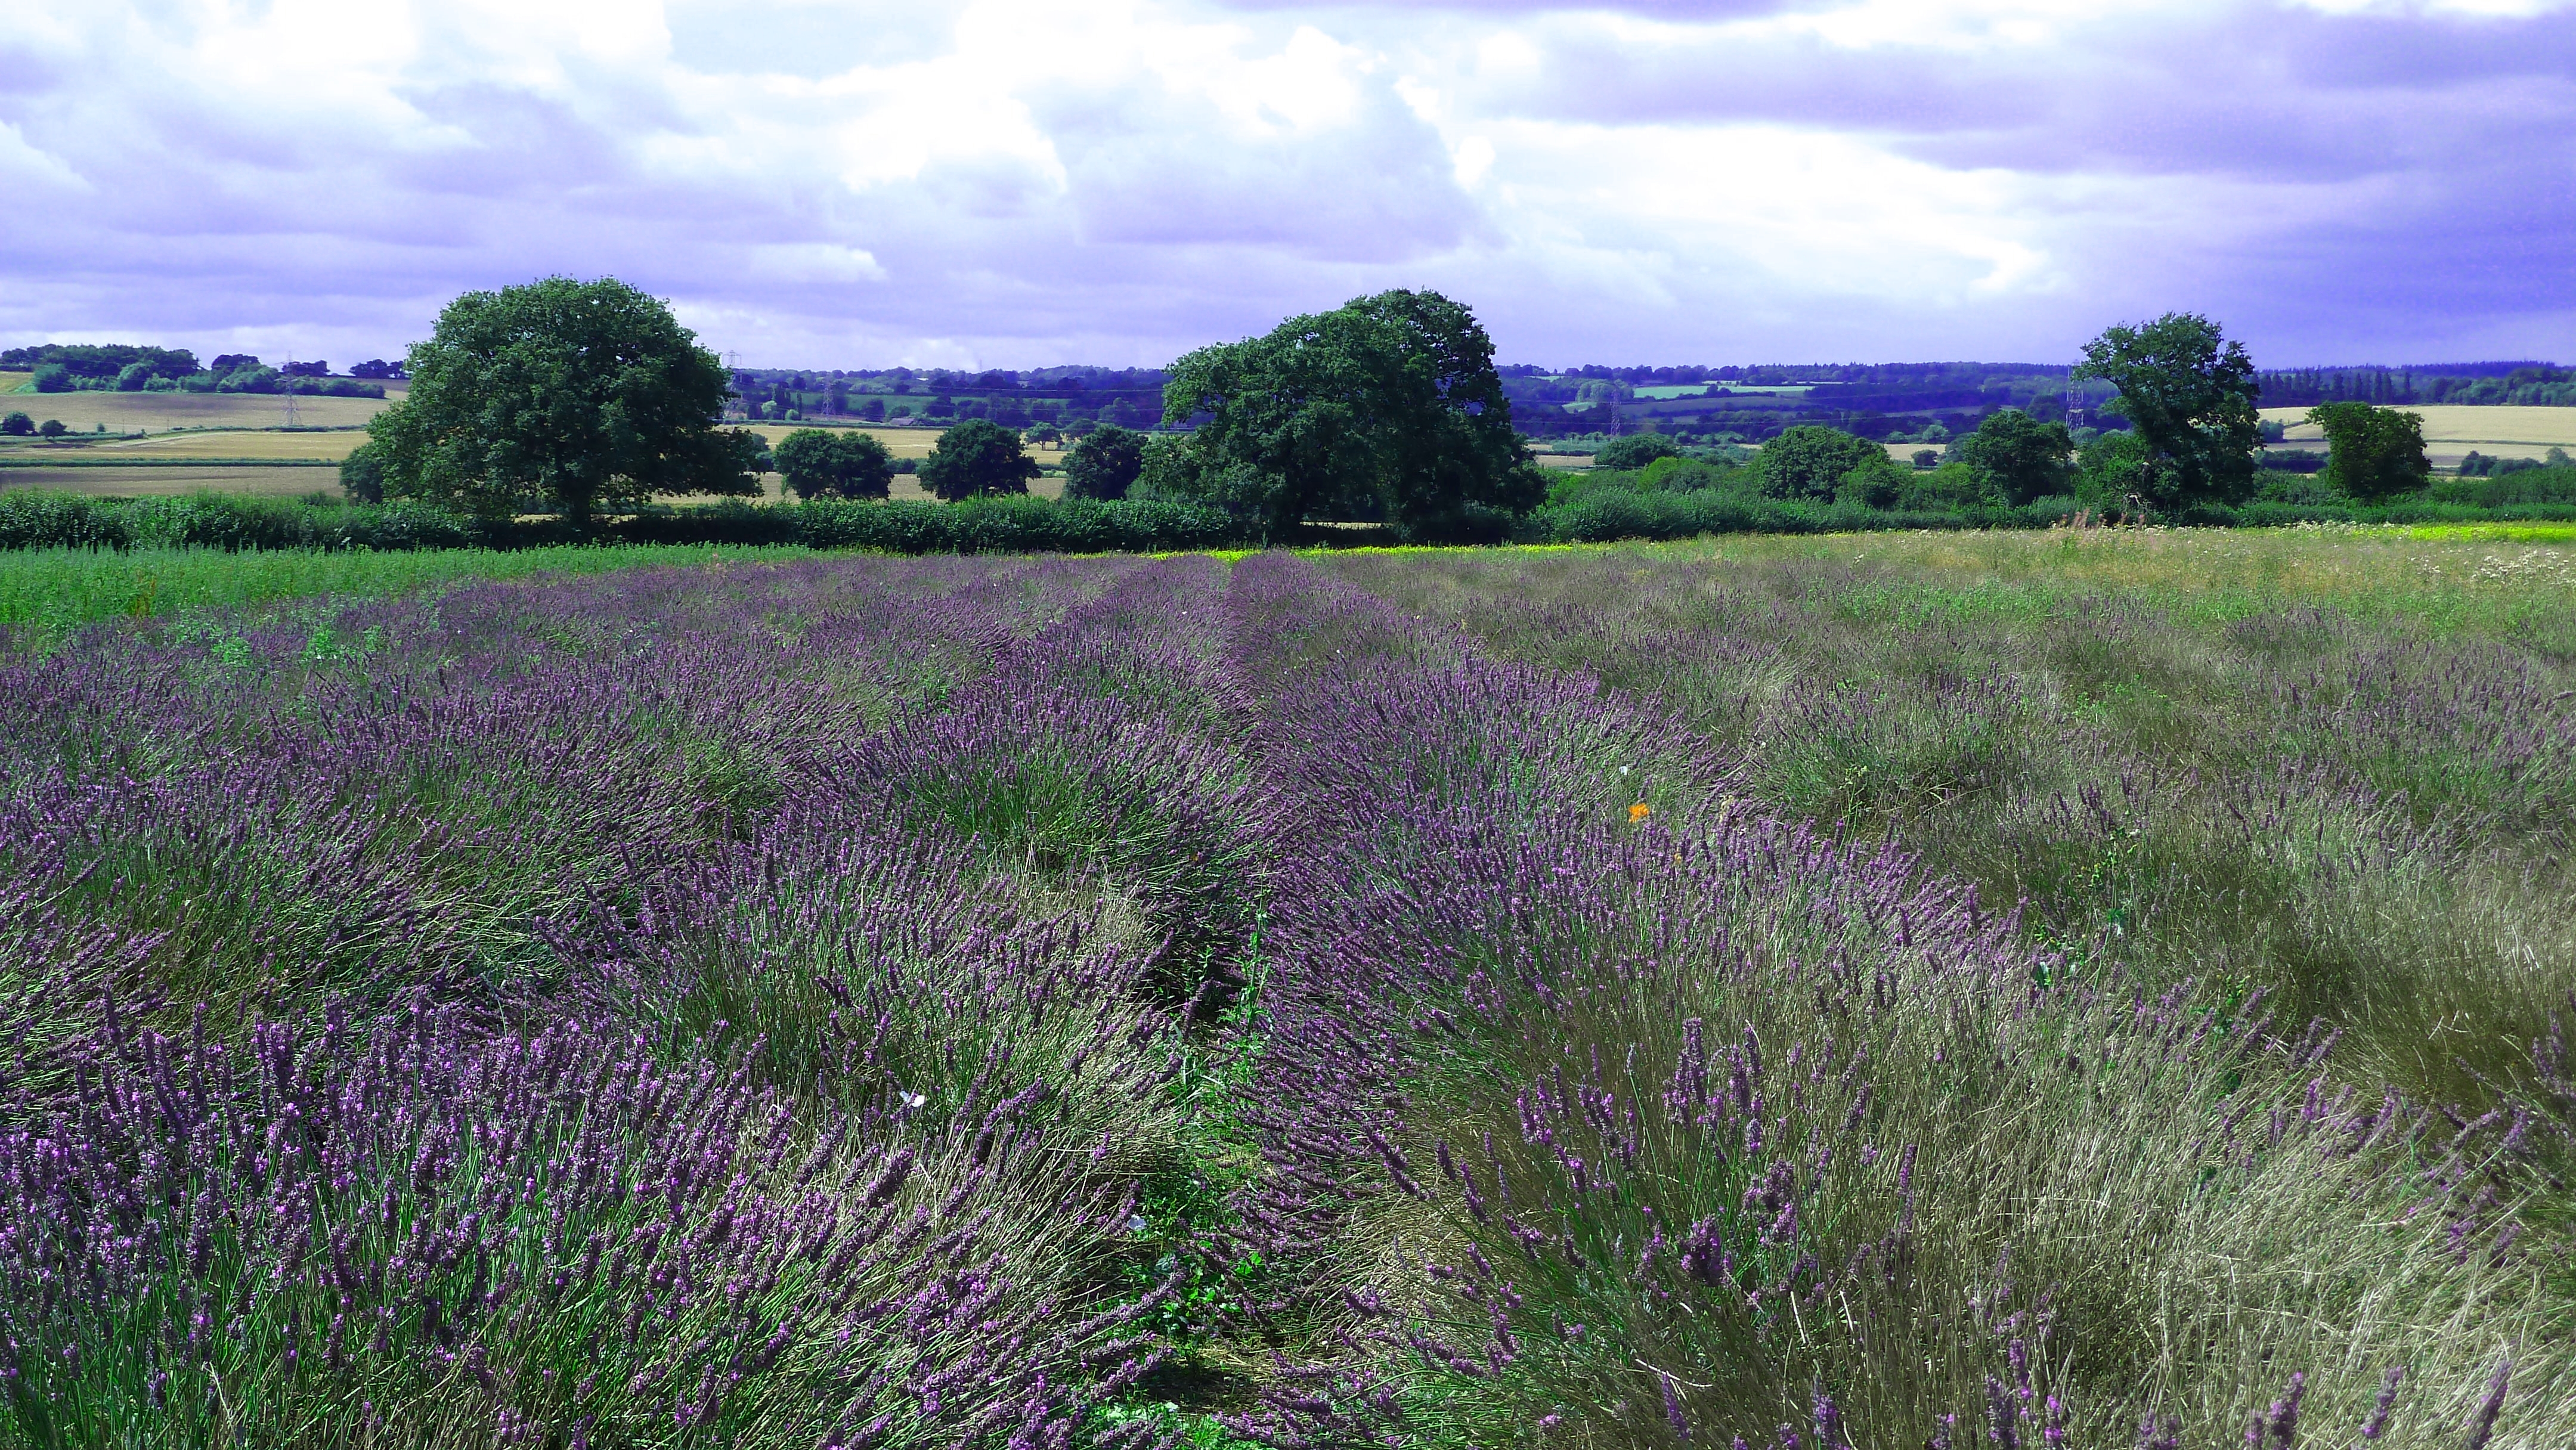 The lavender field photo